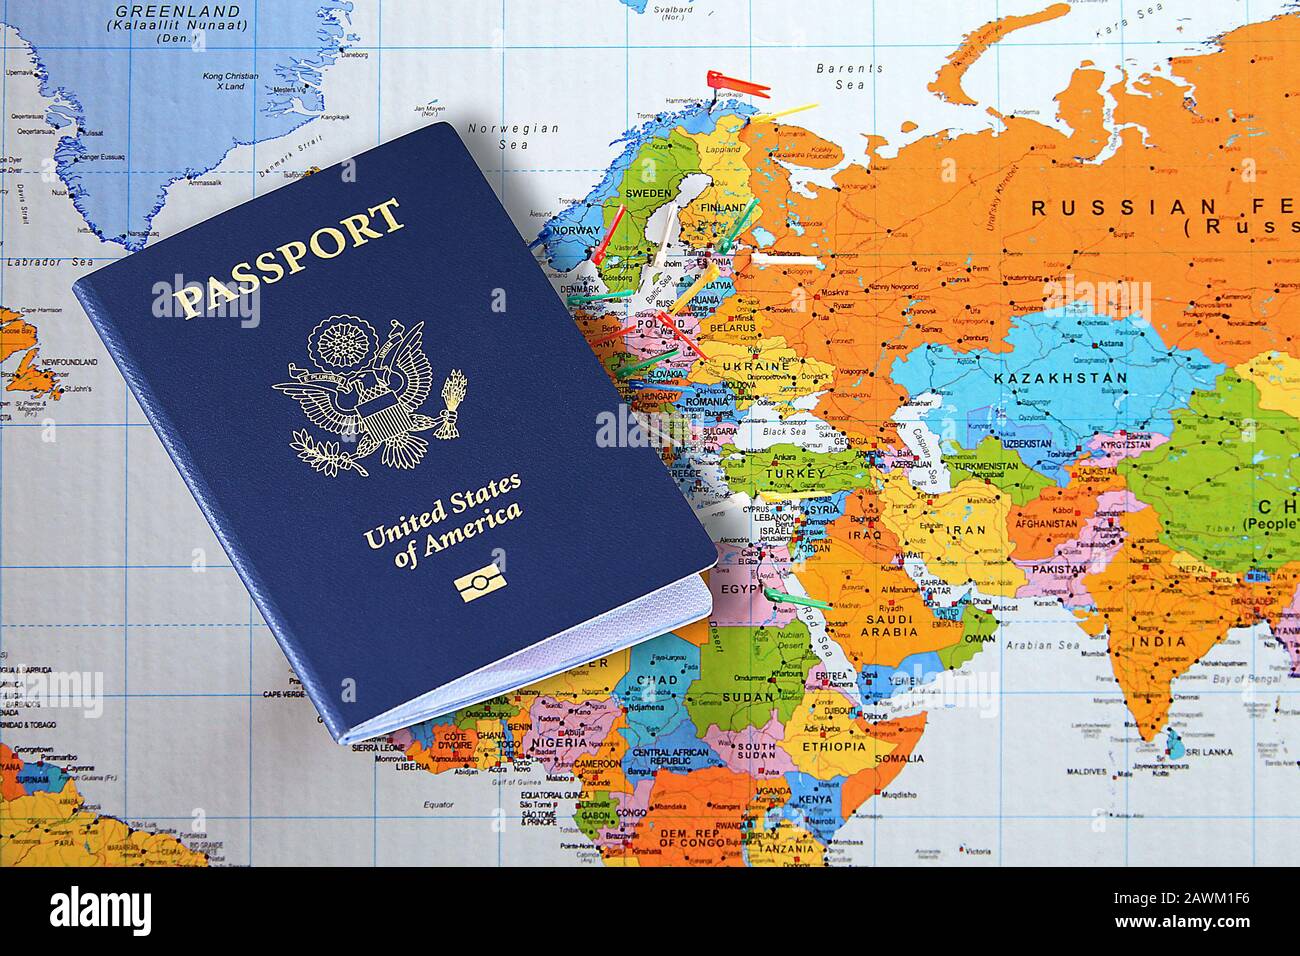 United States Of America Passport On World Map Stock Photo